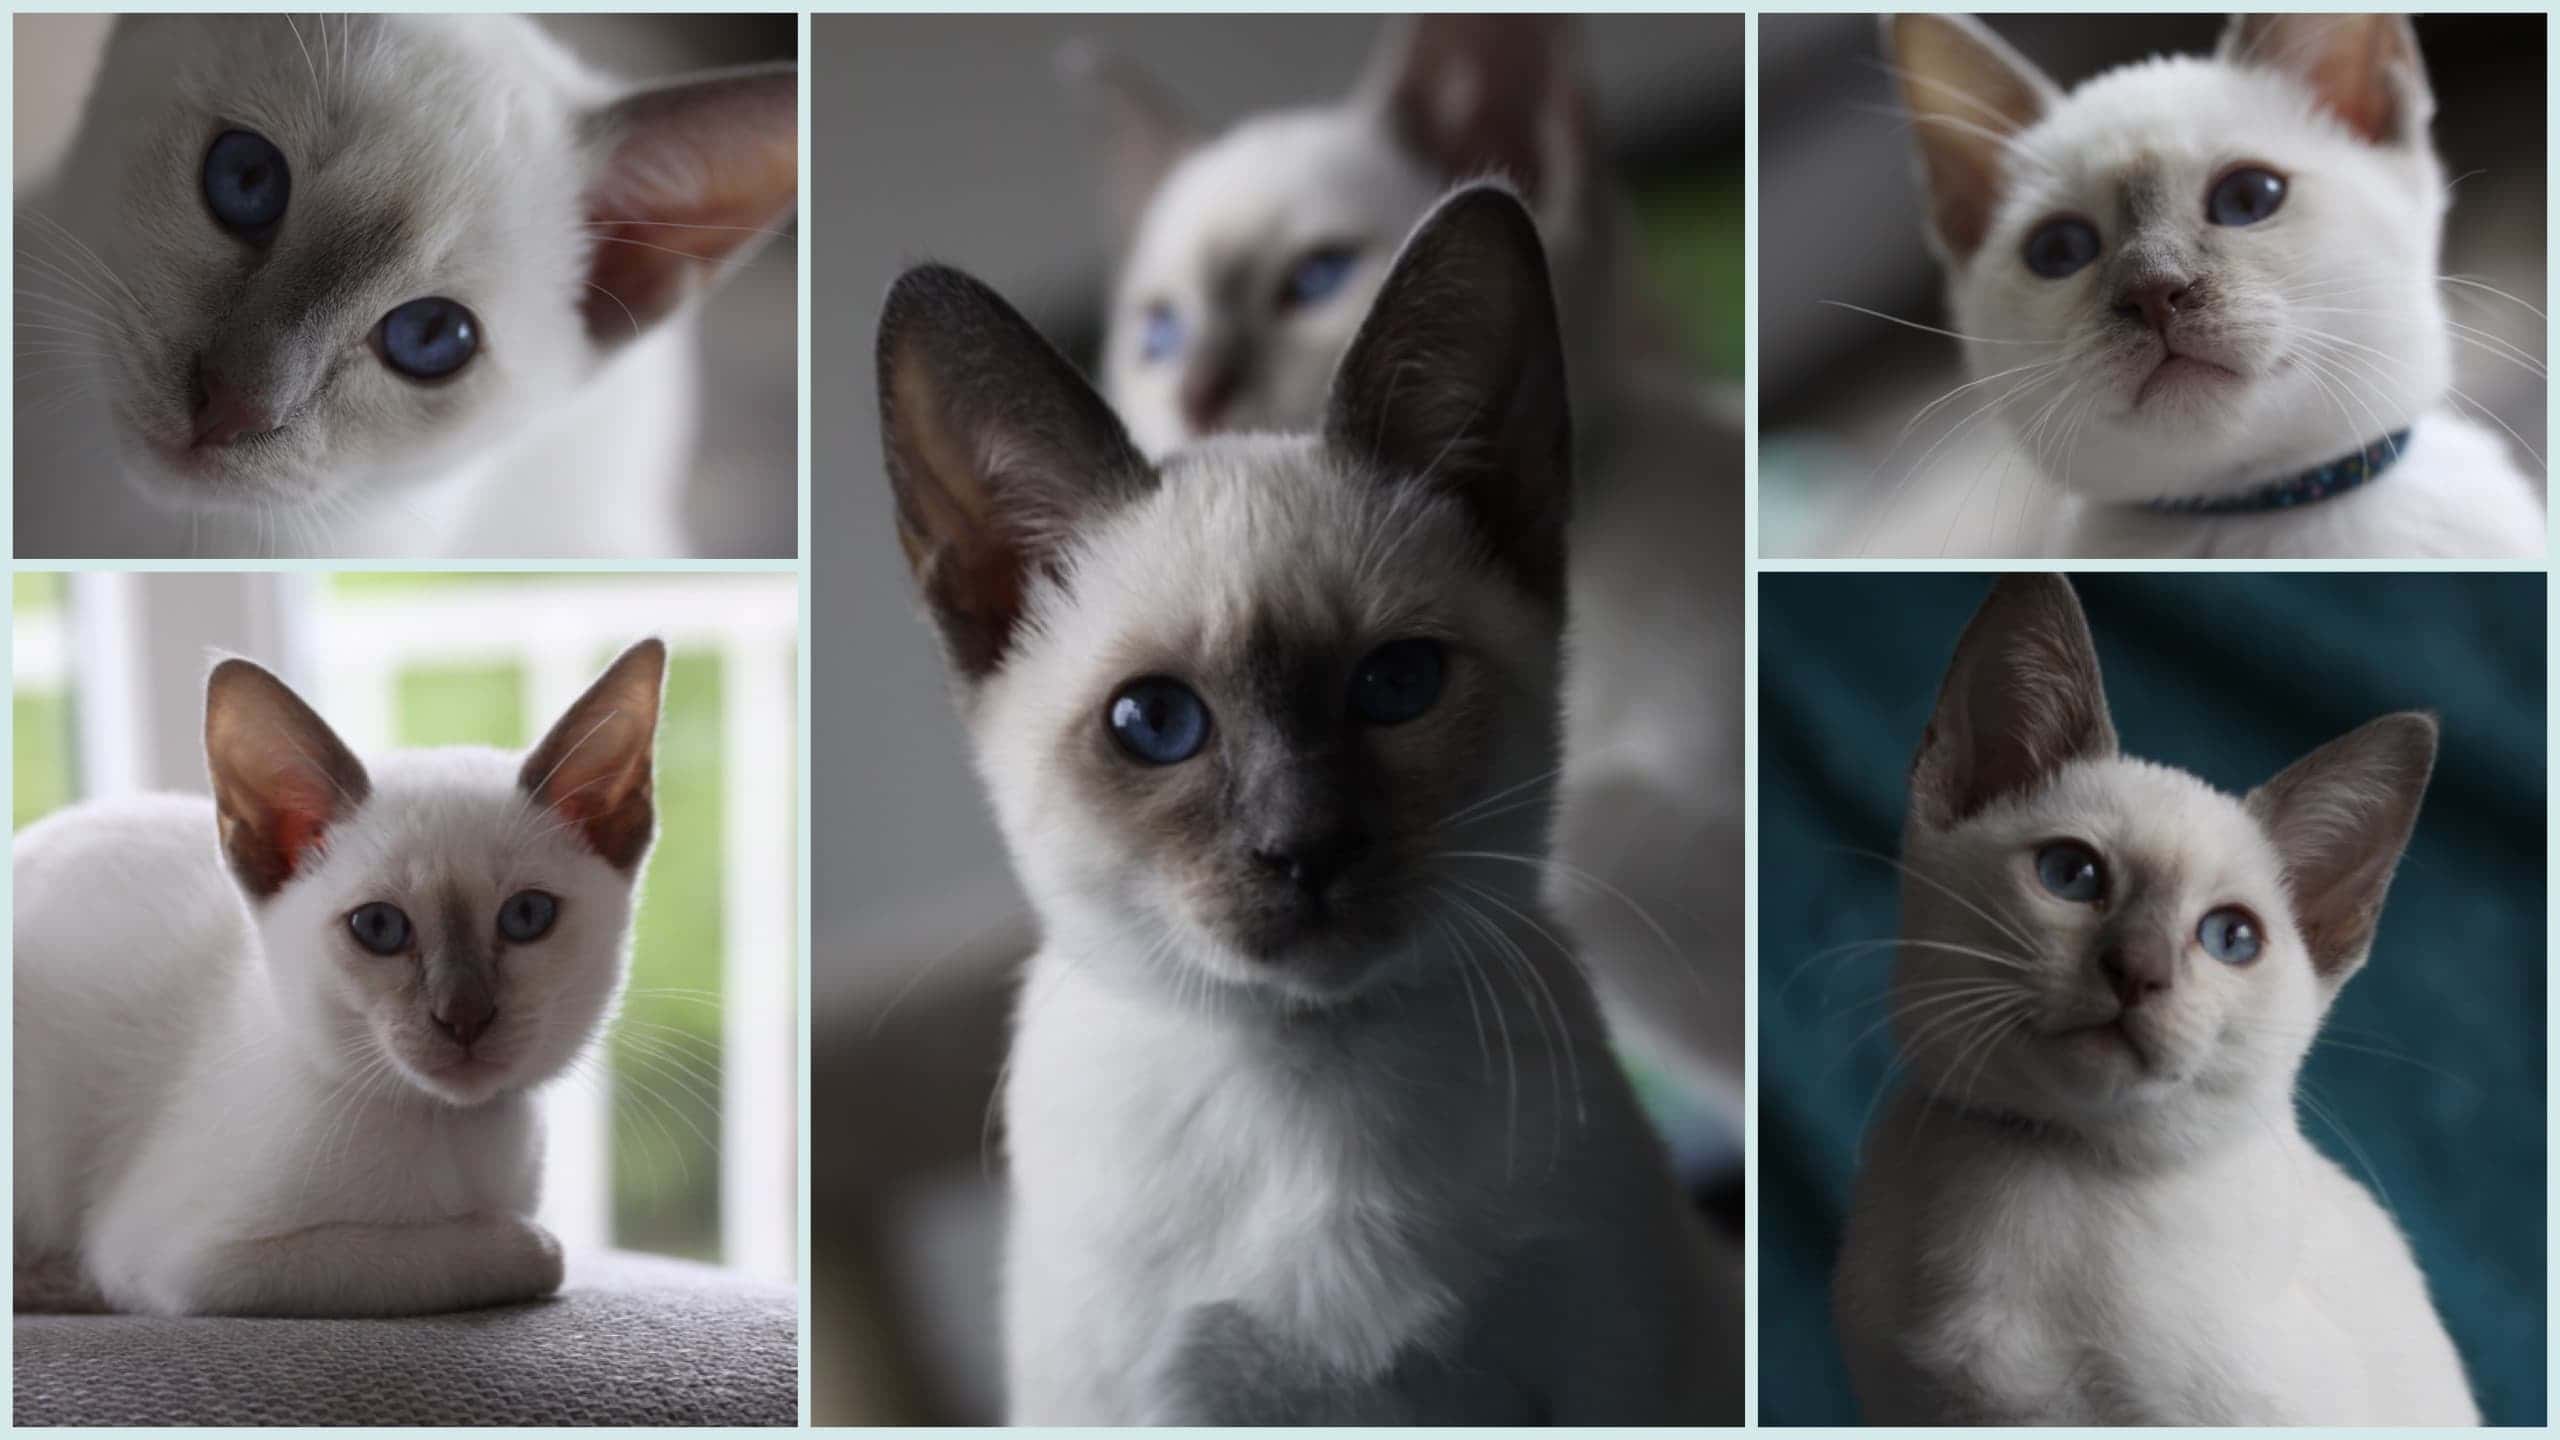 11 week old Old-style Siamese kittens